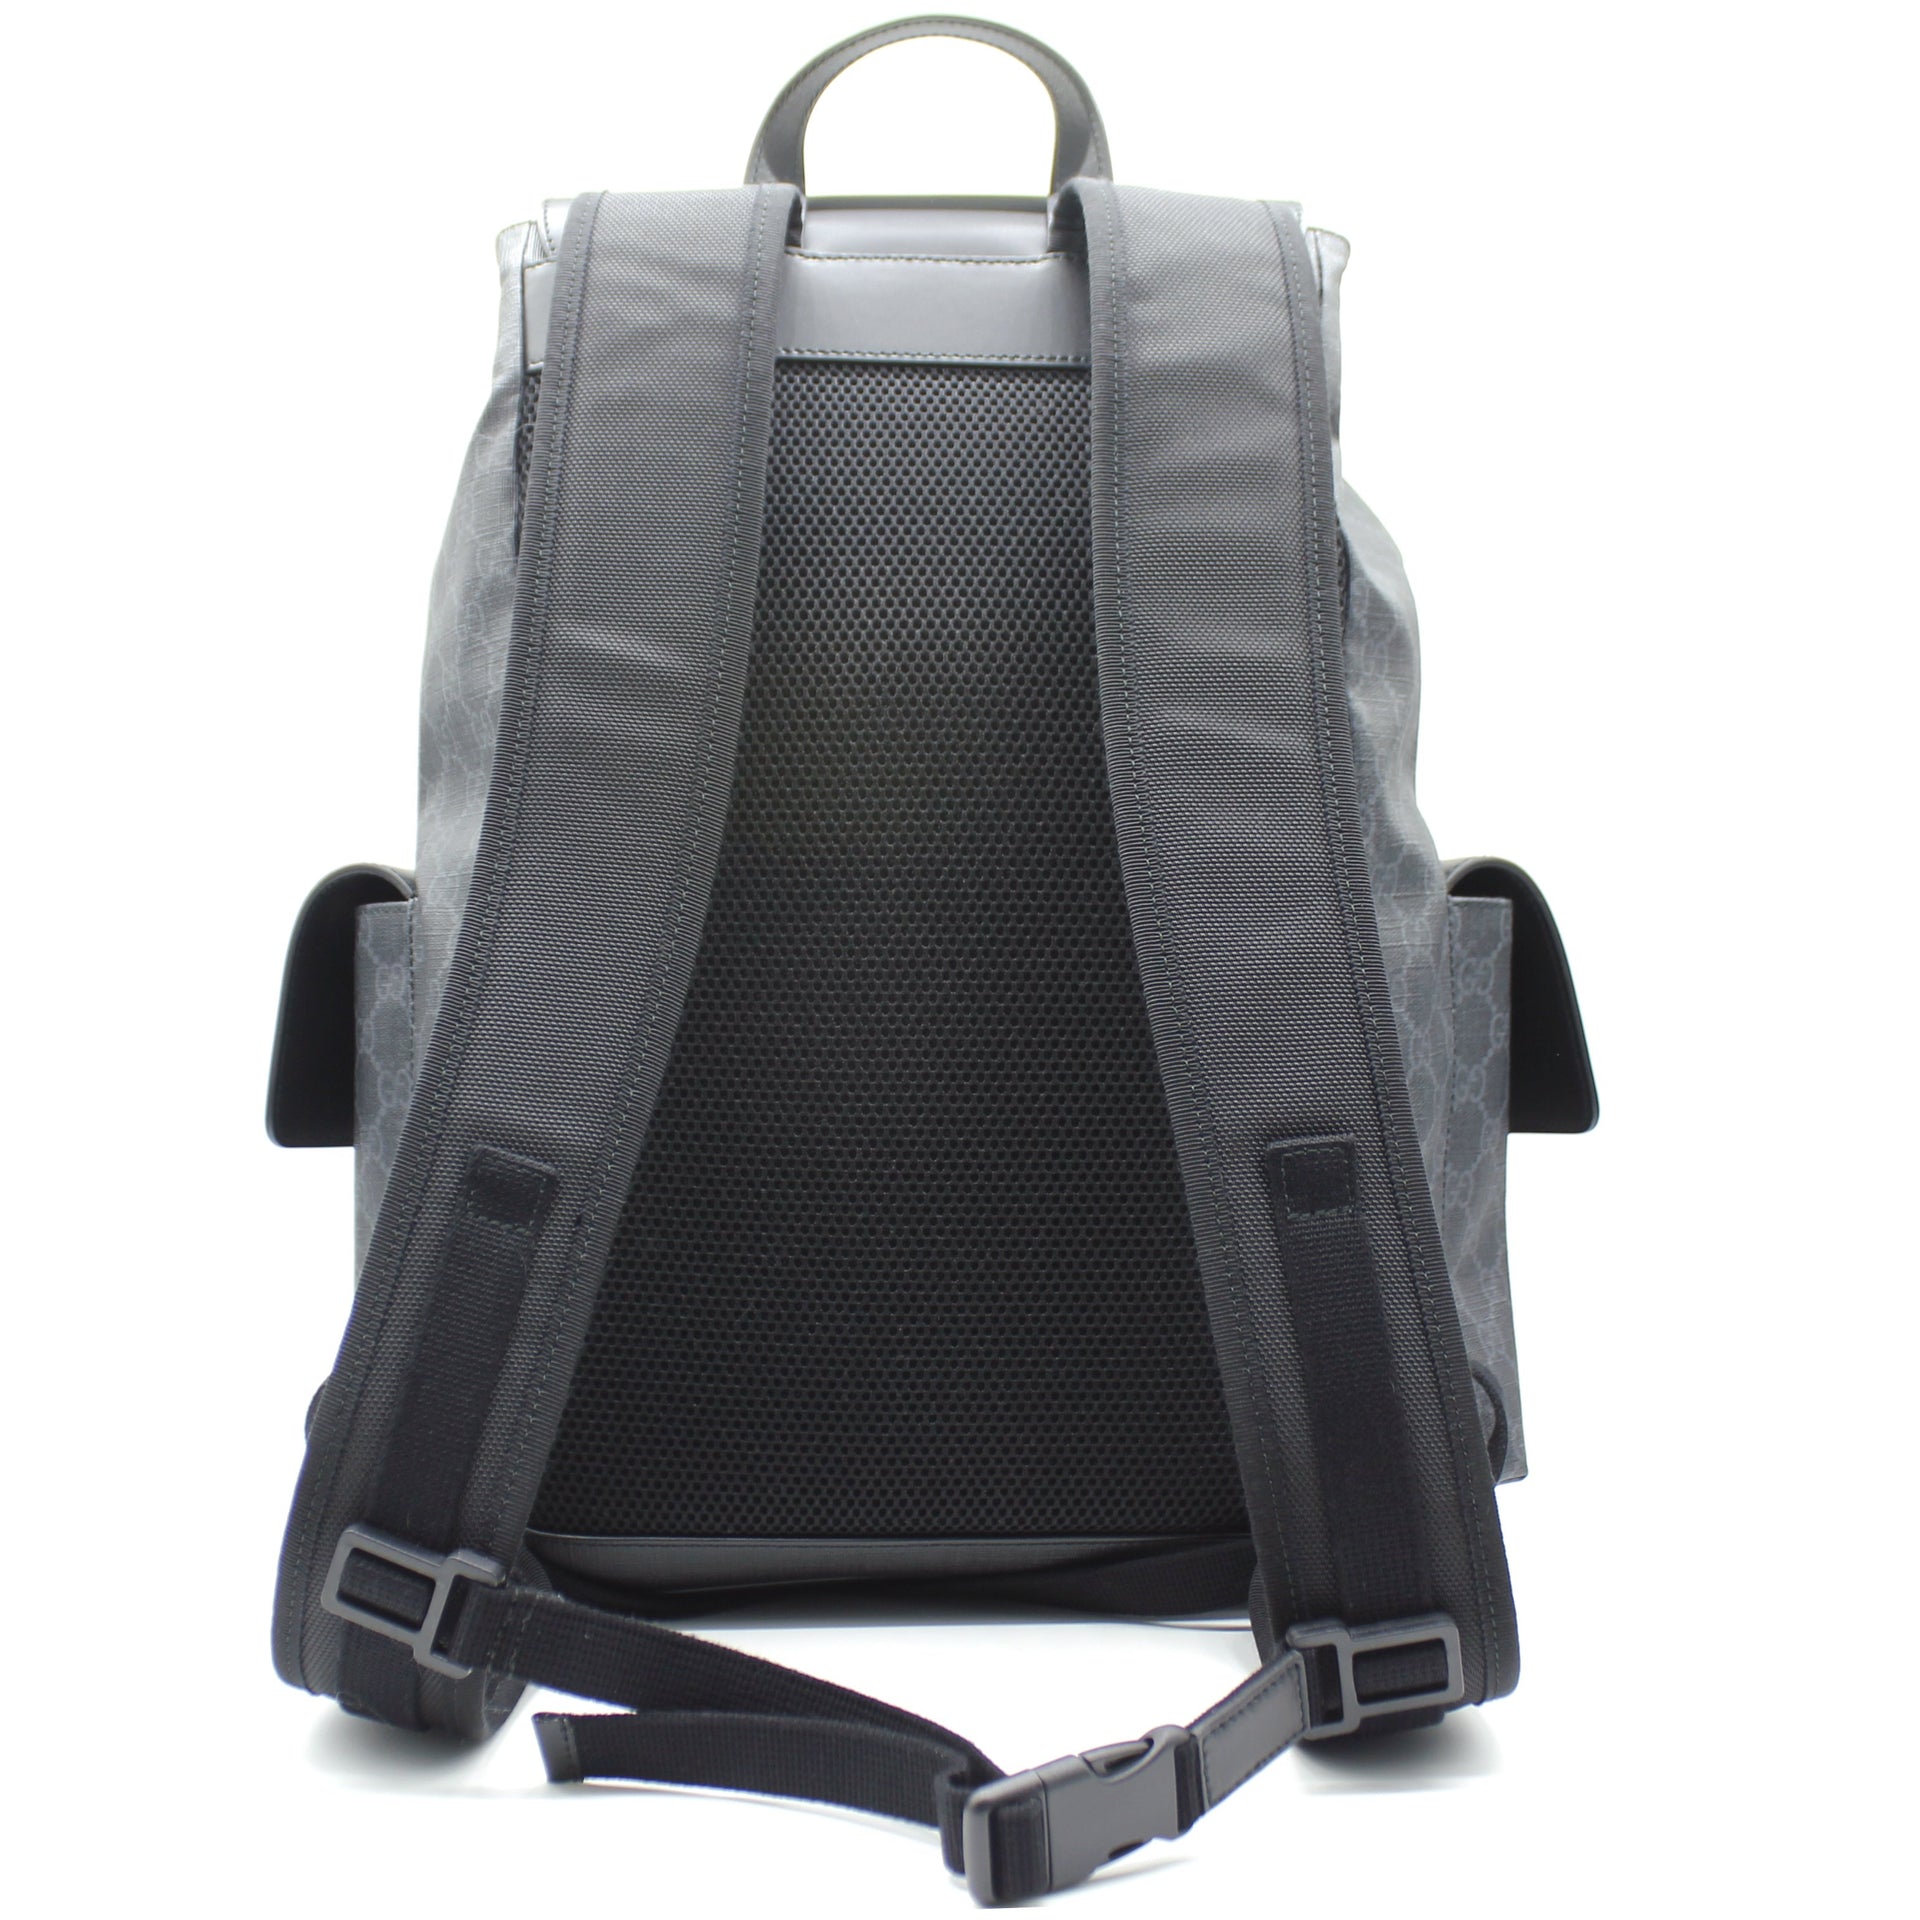 Soft GG Supreme backpack